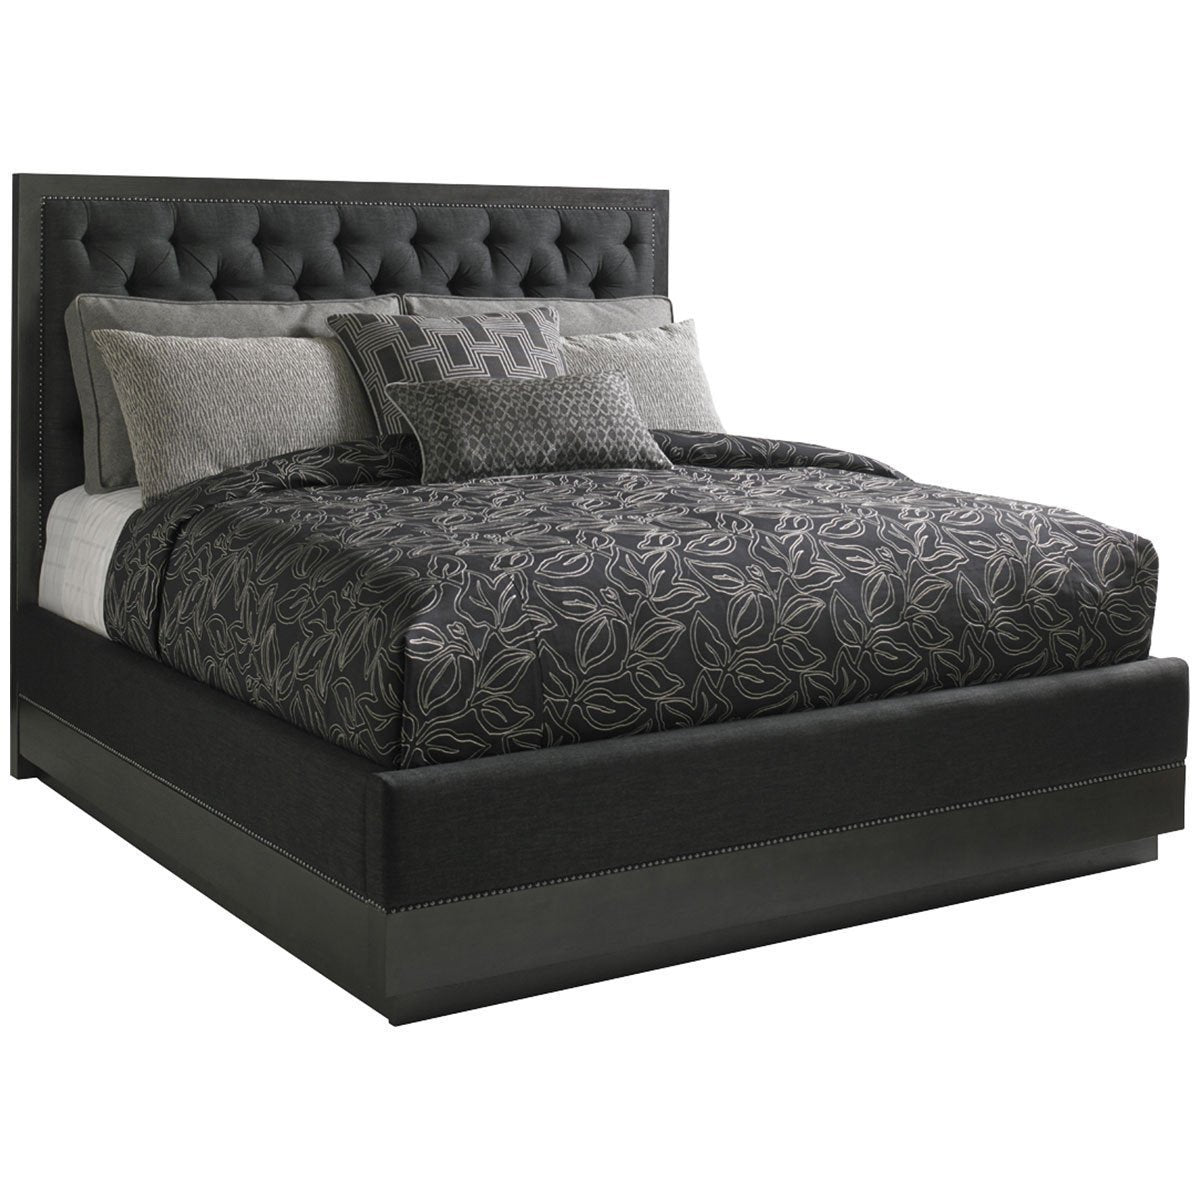 Lexington Carrera Carbon Gray Maranello Upholstered Bed